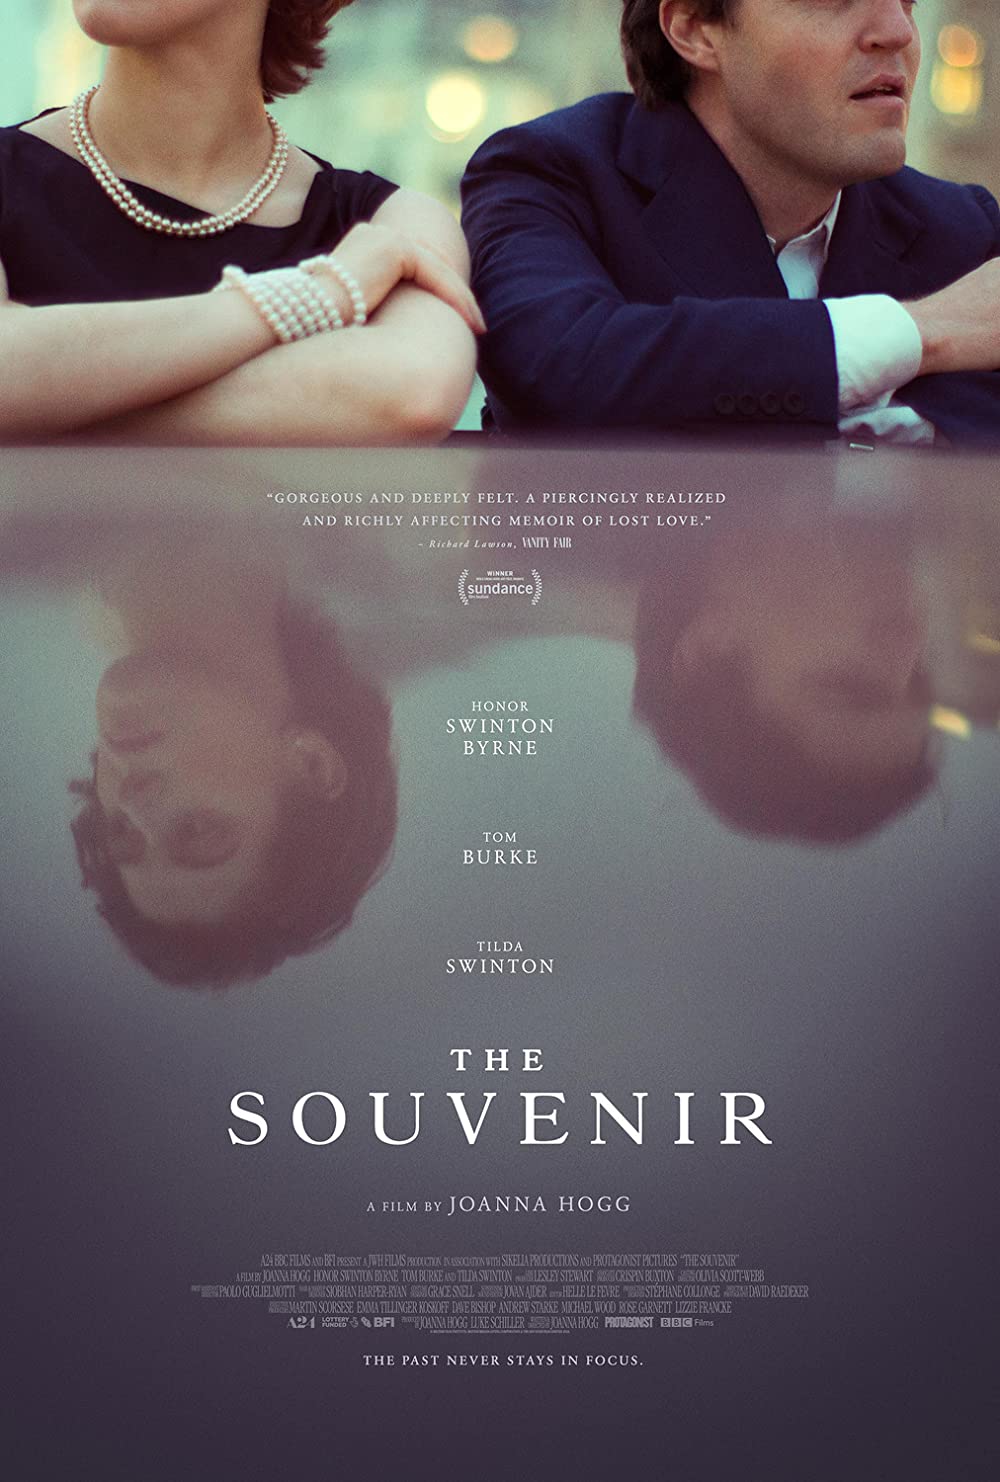 Filmbeschreibung zu The Souvenir (OV)